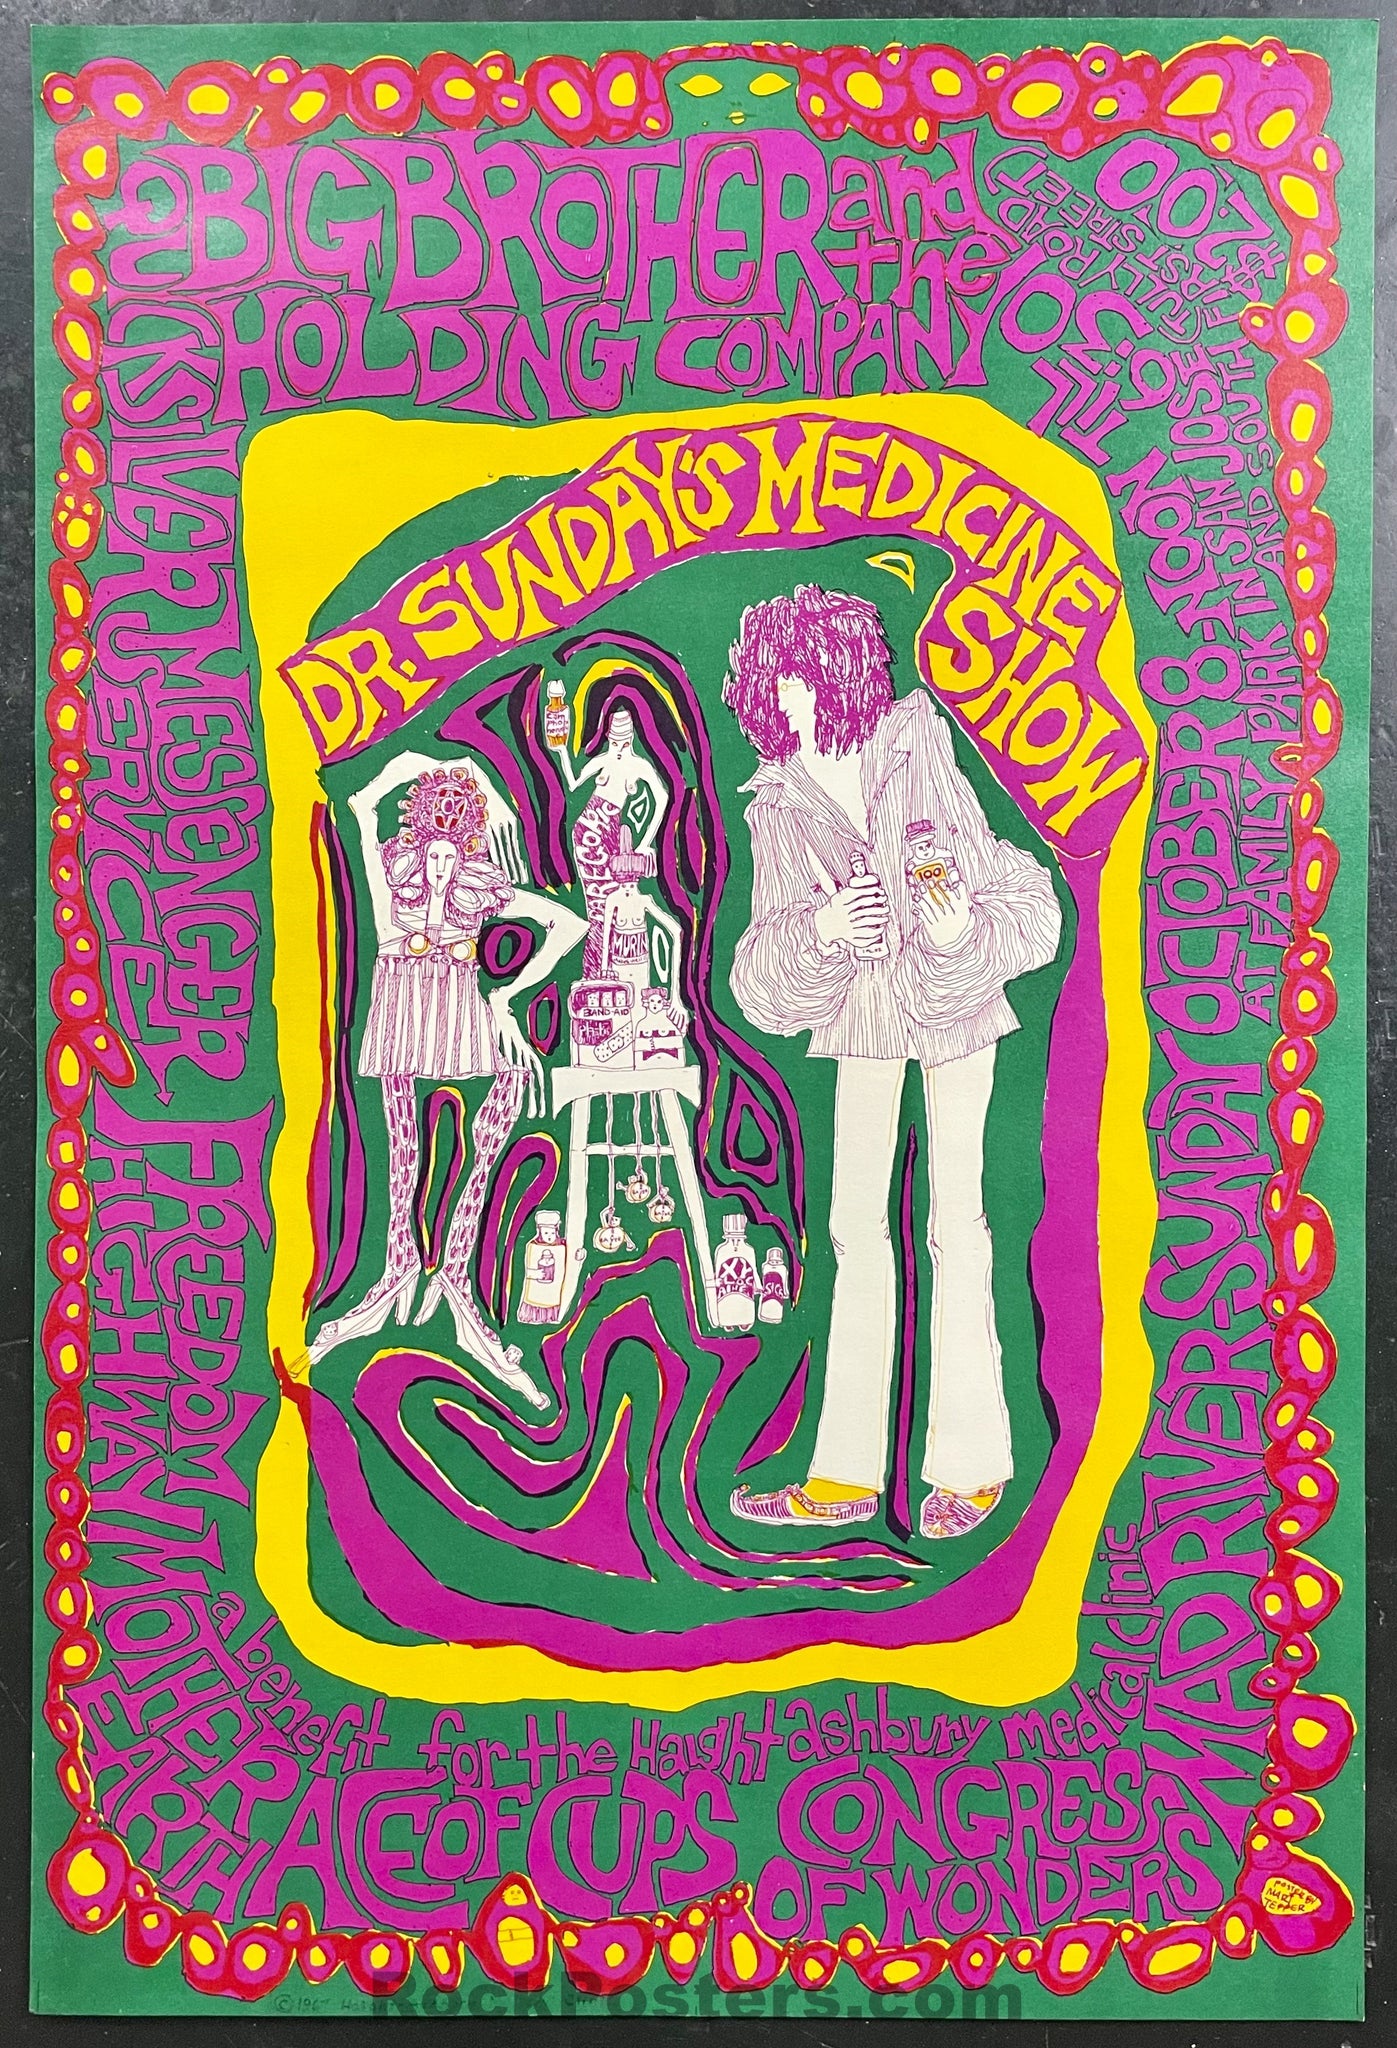 AUCTION - AOR 2.339 - Janis Joplin Big Brother - 1967 Poster - San Jose - Near Mint Minus